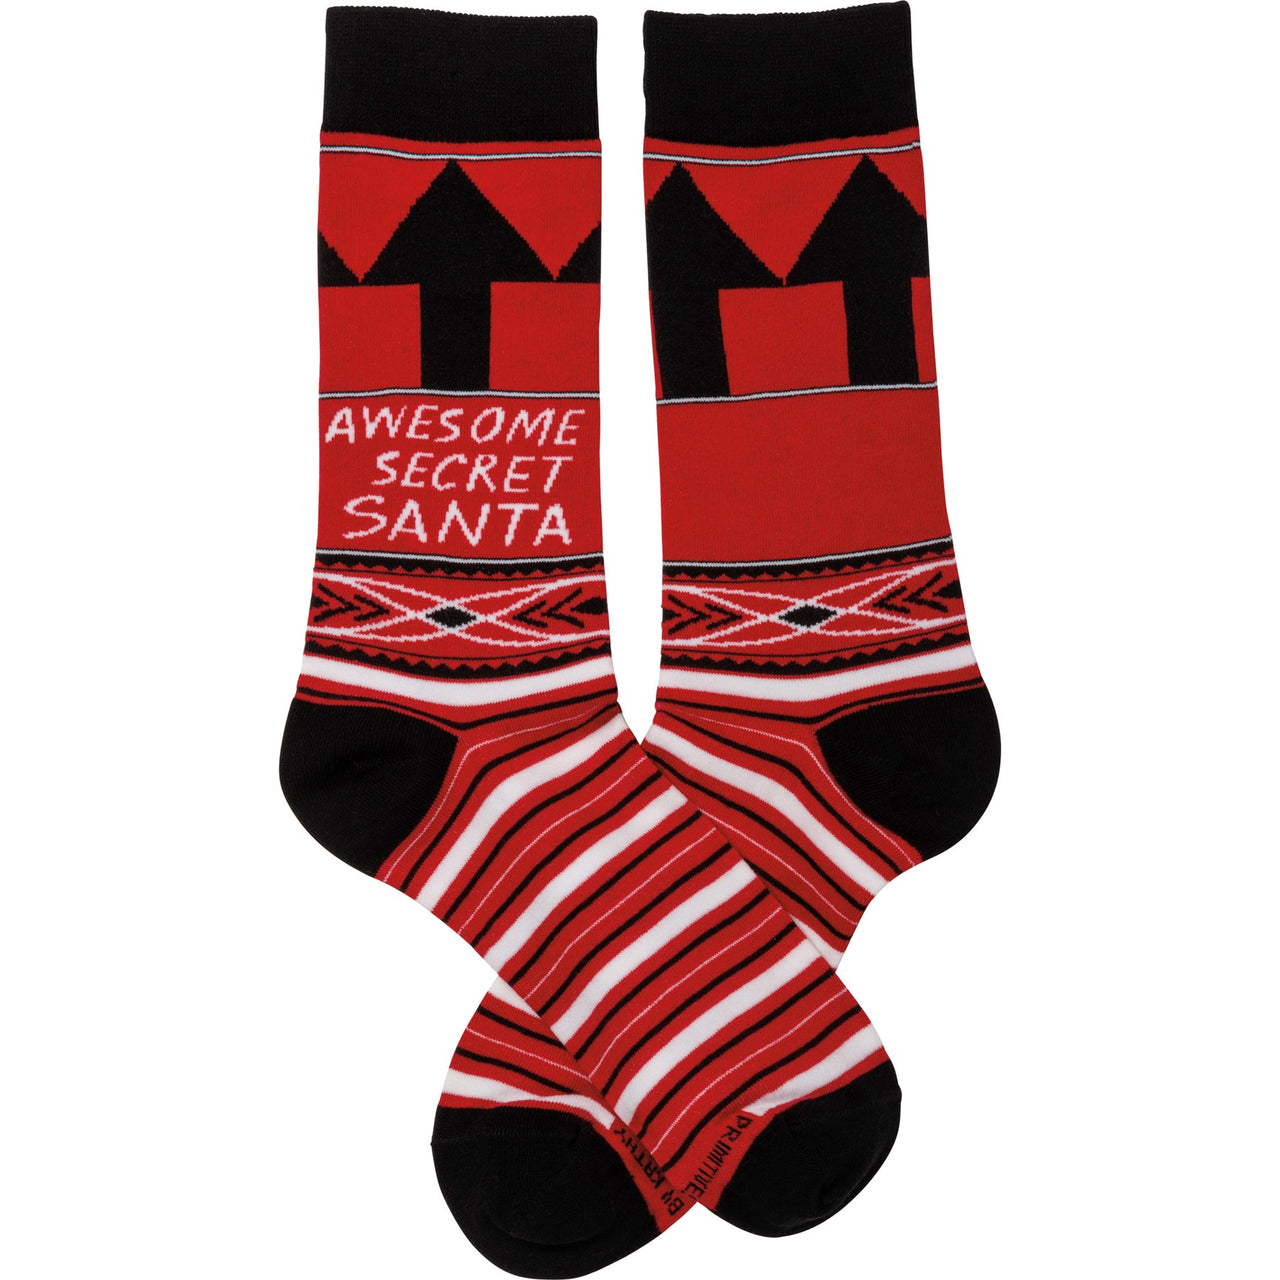 Socks - Awesome Secret Santa